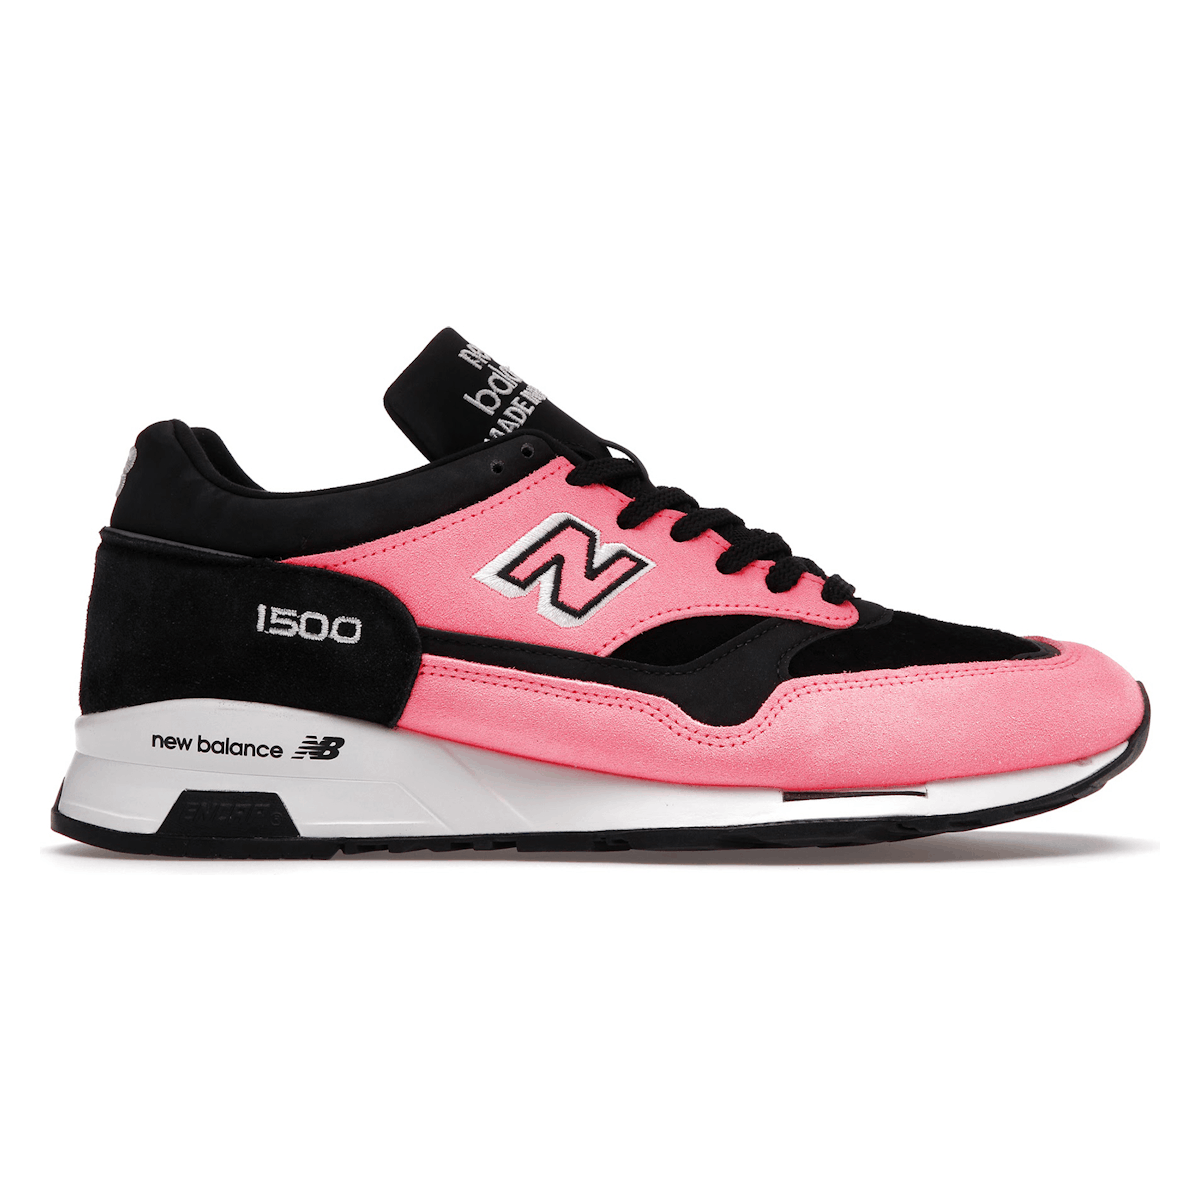 New Balance 1500 Neon Pink